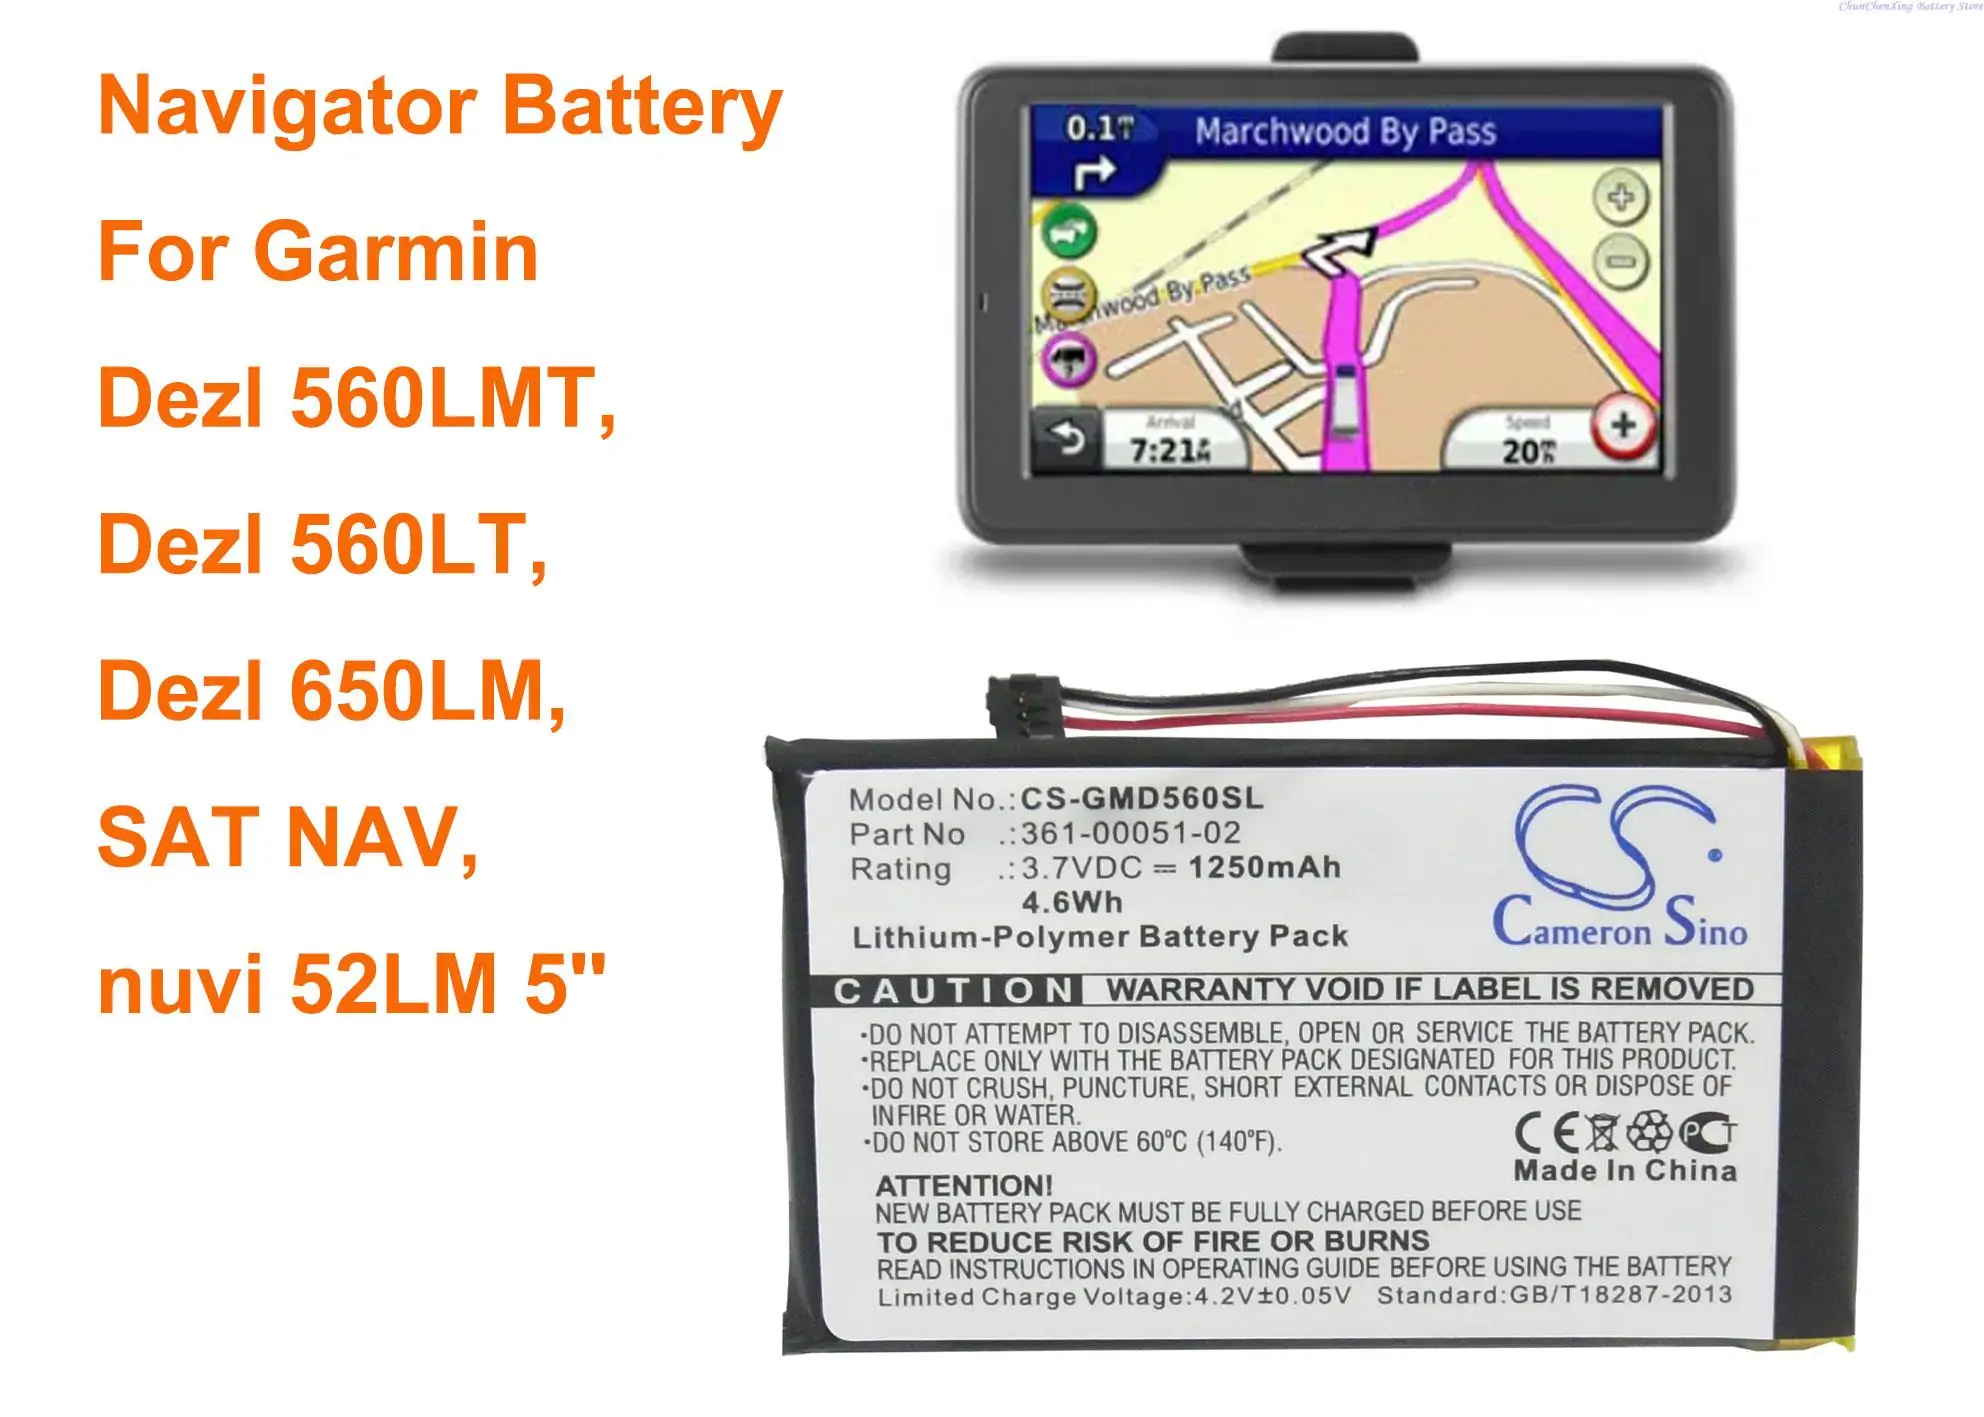 

Cameron Sino 1250mAh GPS, Navigator Battery for Garmin Dezl 560LMT, Dezl 560LT, Dezl 650LM, SAT NAV, nuvi 52LM 5''